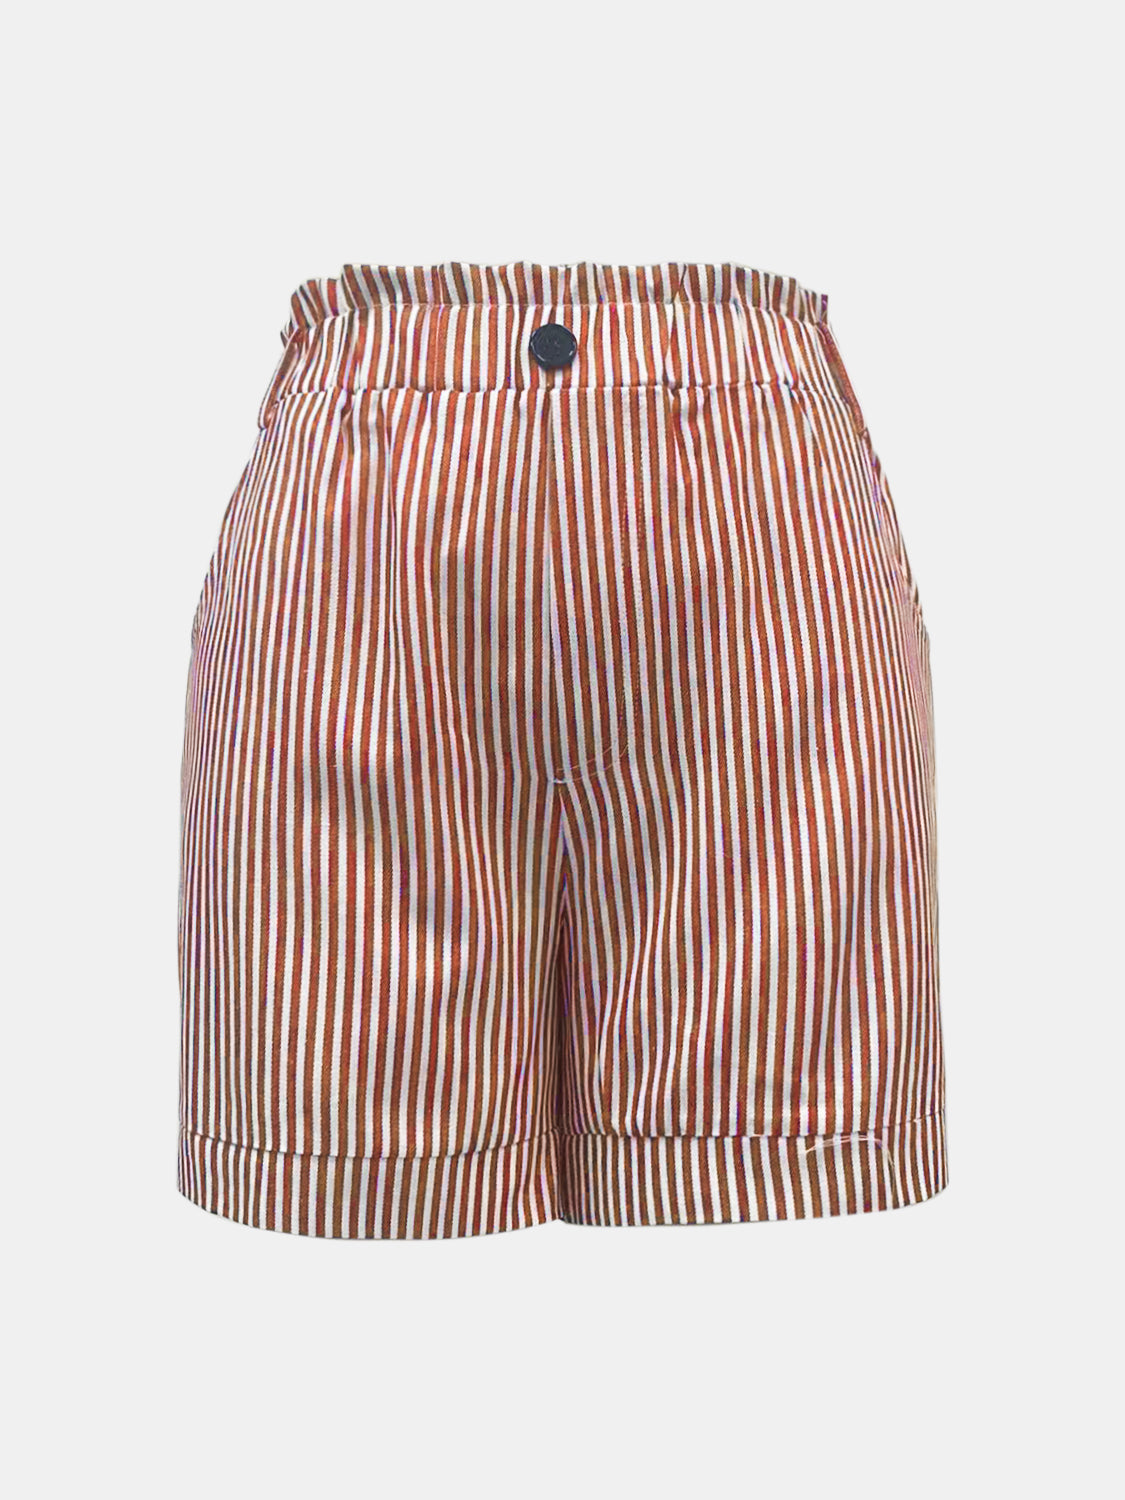 Full Size Striped Shorts with Pockets - Tigbuls Variety Fashion